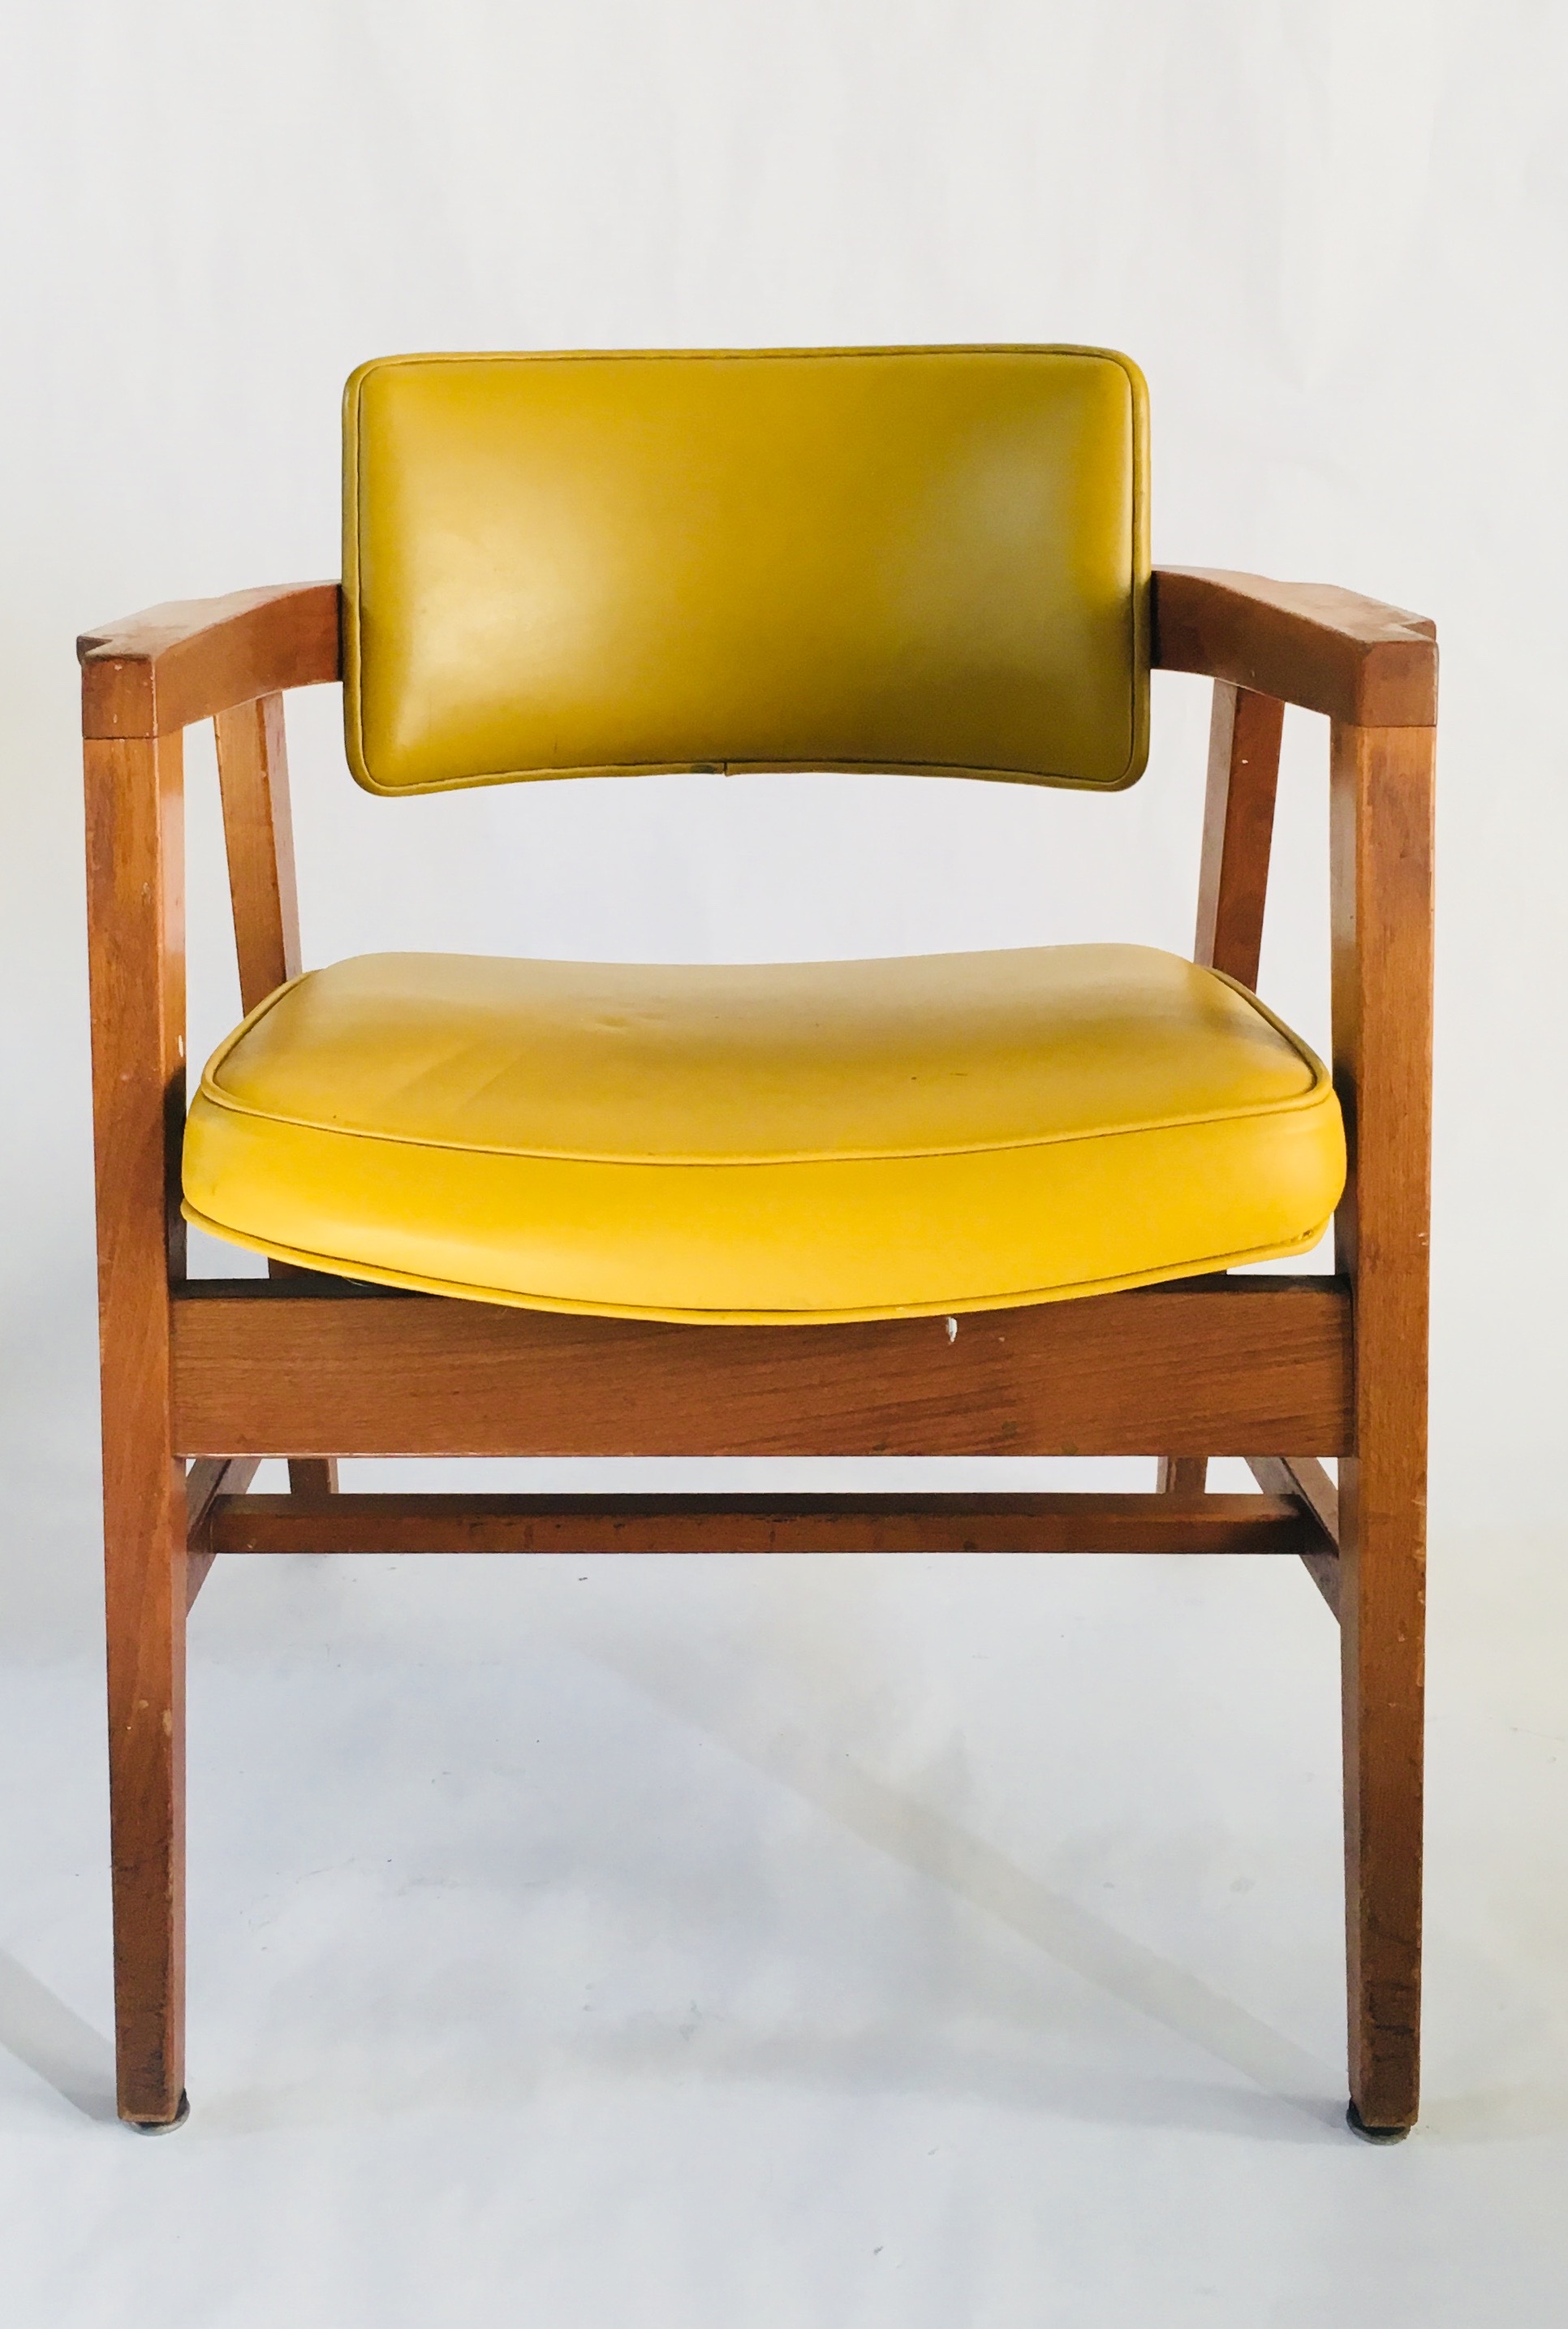 vintage yellow modern arm chairgunlocke chair co  kyla coburn designs   commercial restaurant hospitality